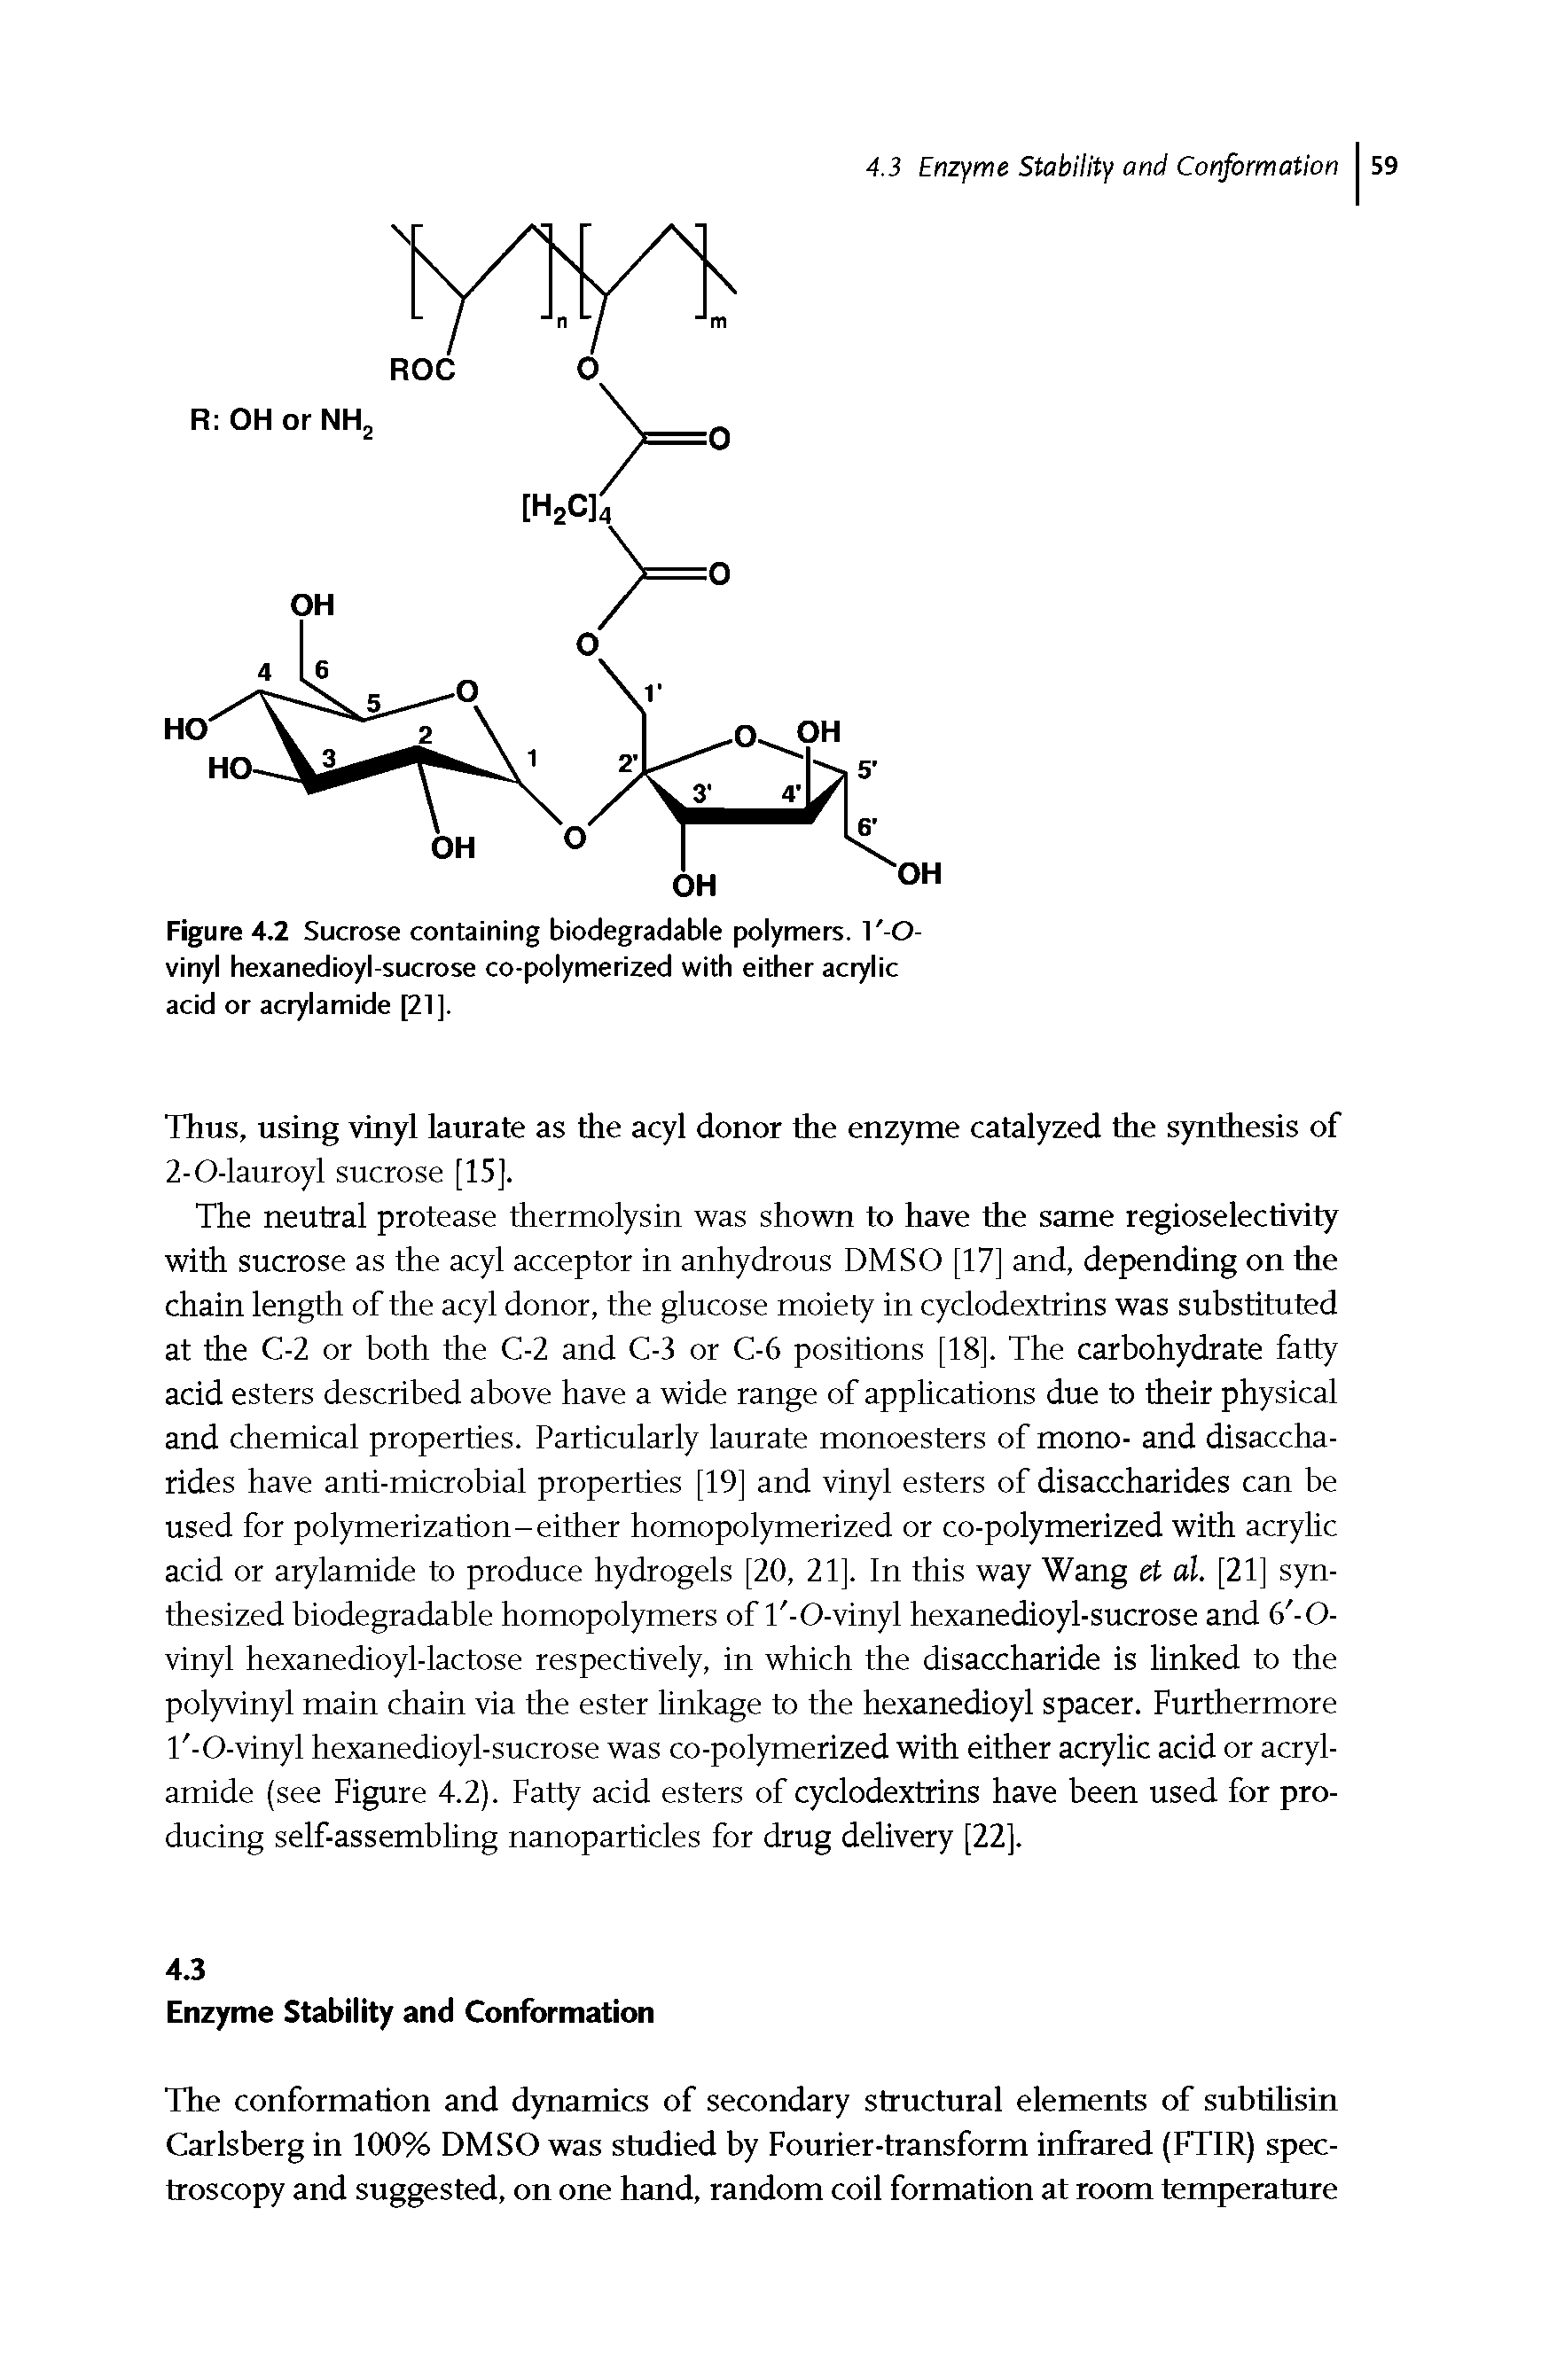 Figure 4.2 Sucrose containing biodegradable polymers. I -O-vinyl hexanedioyl-sucrose co-polymerized with either acrylic acid or acrylamide [21].